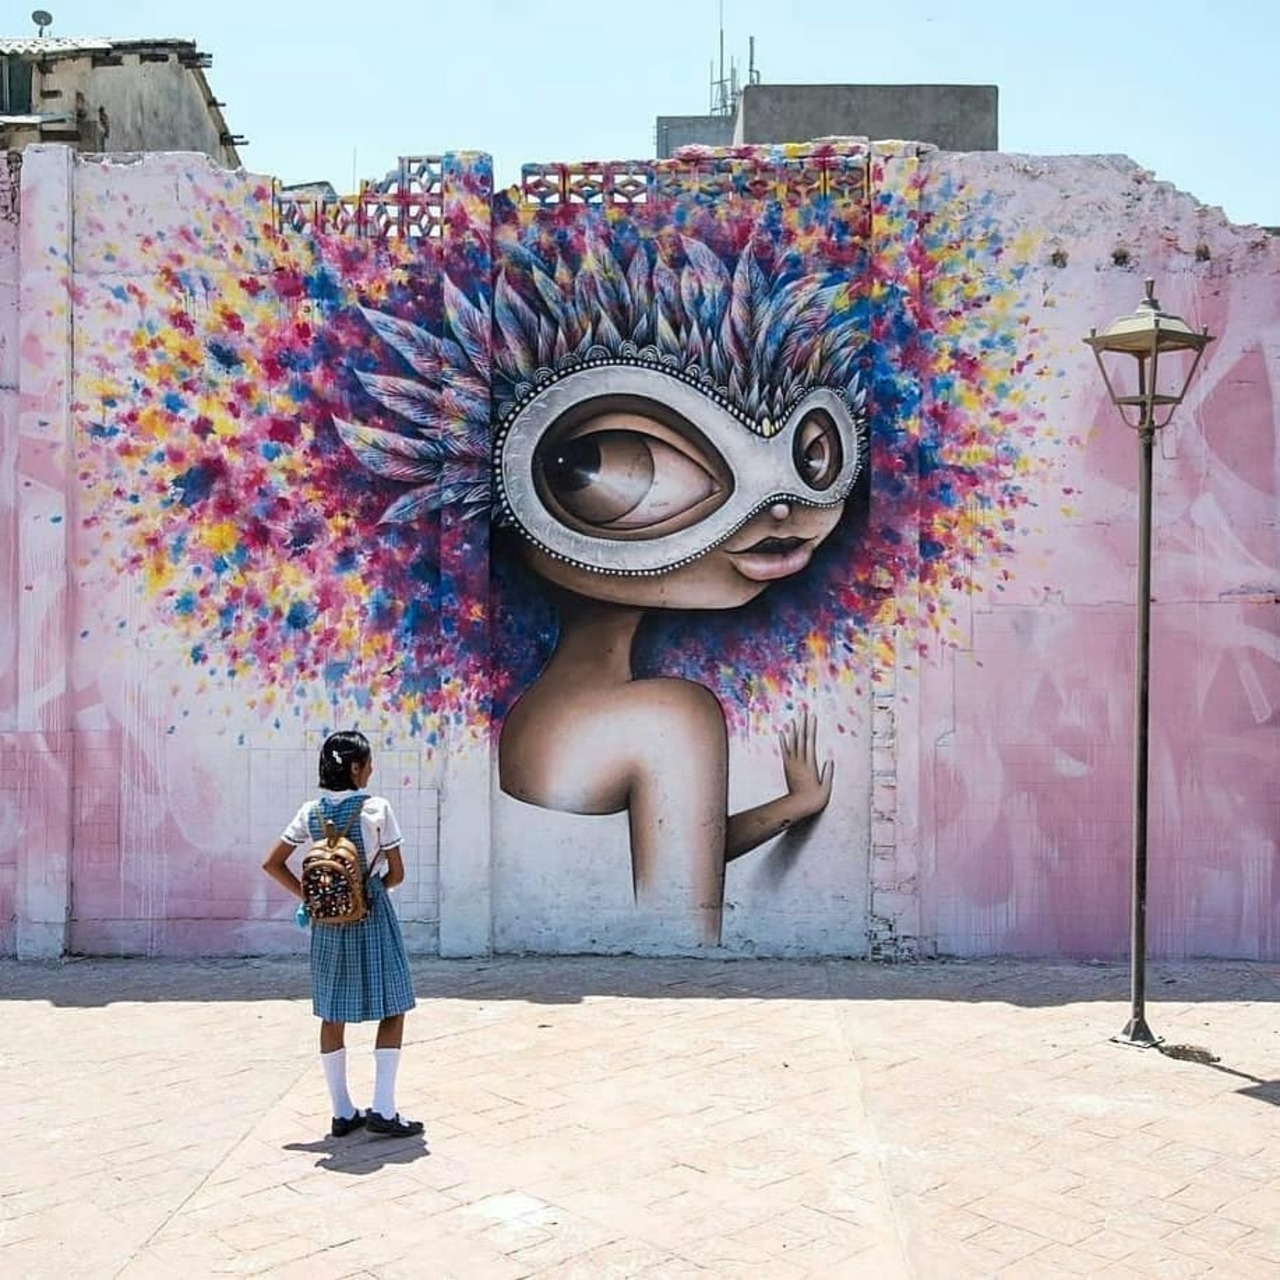 Wonderful Street Art by @VinieGraffiti . . . #art #artists #artlovers #srtwork #traditionalart #streetart #streetartist #graffiti #muralart #wallart #urbanart #artistsnartlovers https://t.co/9NNjx0xTqu